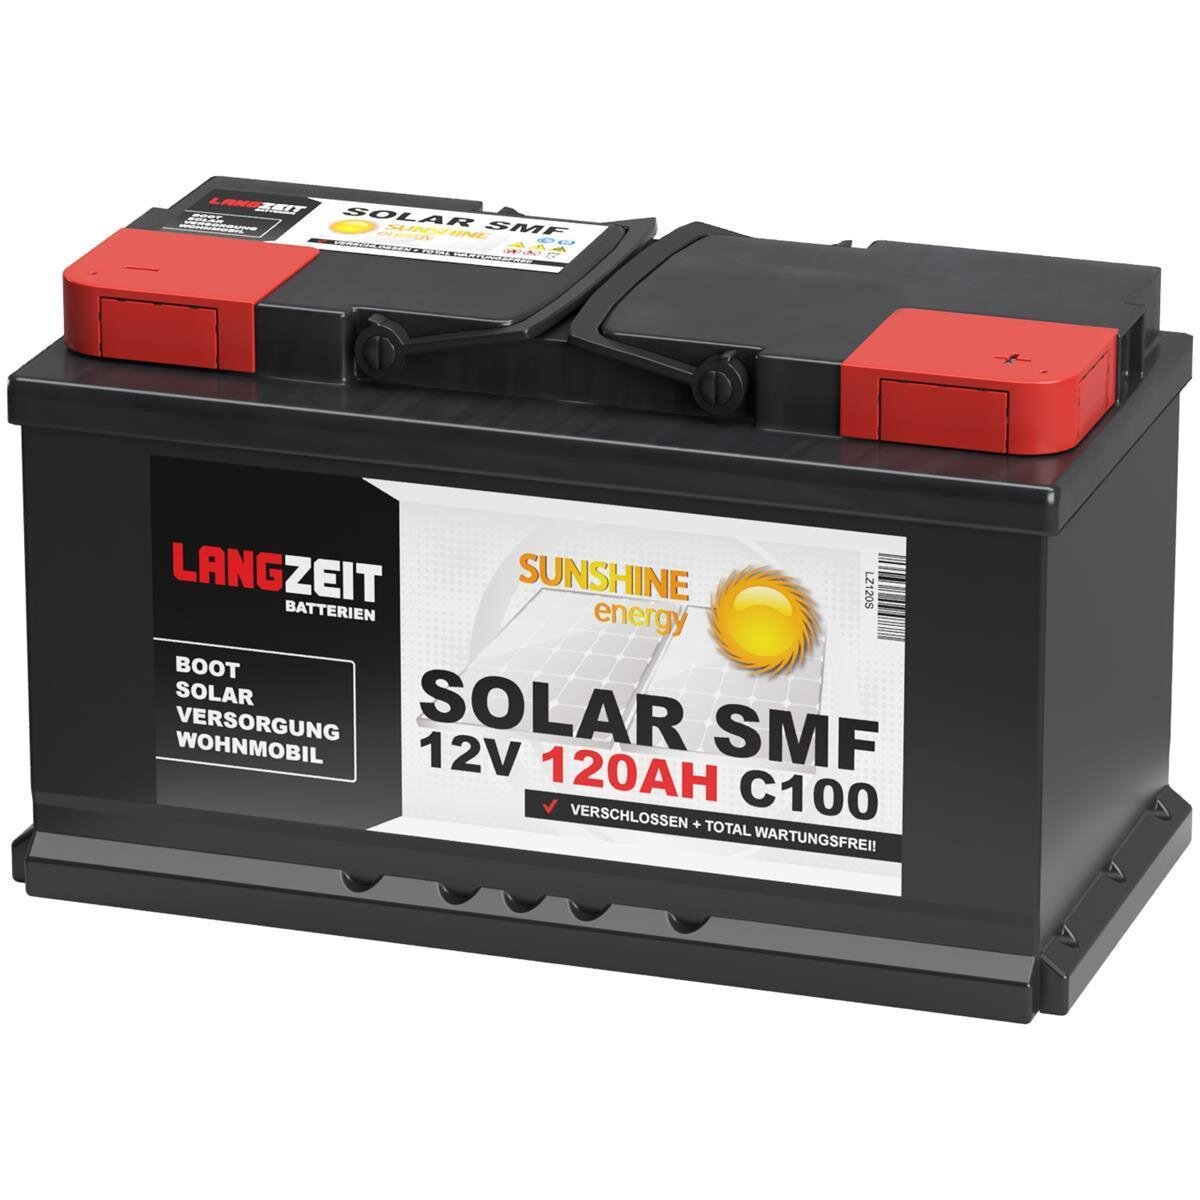 Solarbatterie 120Ah 12V EXAKT DCS Wohnmobil Versorgung Boot Solar Batterie  (120AH 12V) : : Gewerbe, Industrie & Wissenschaft